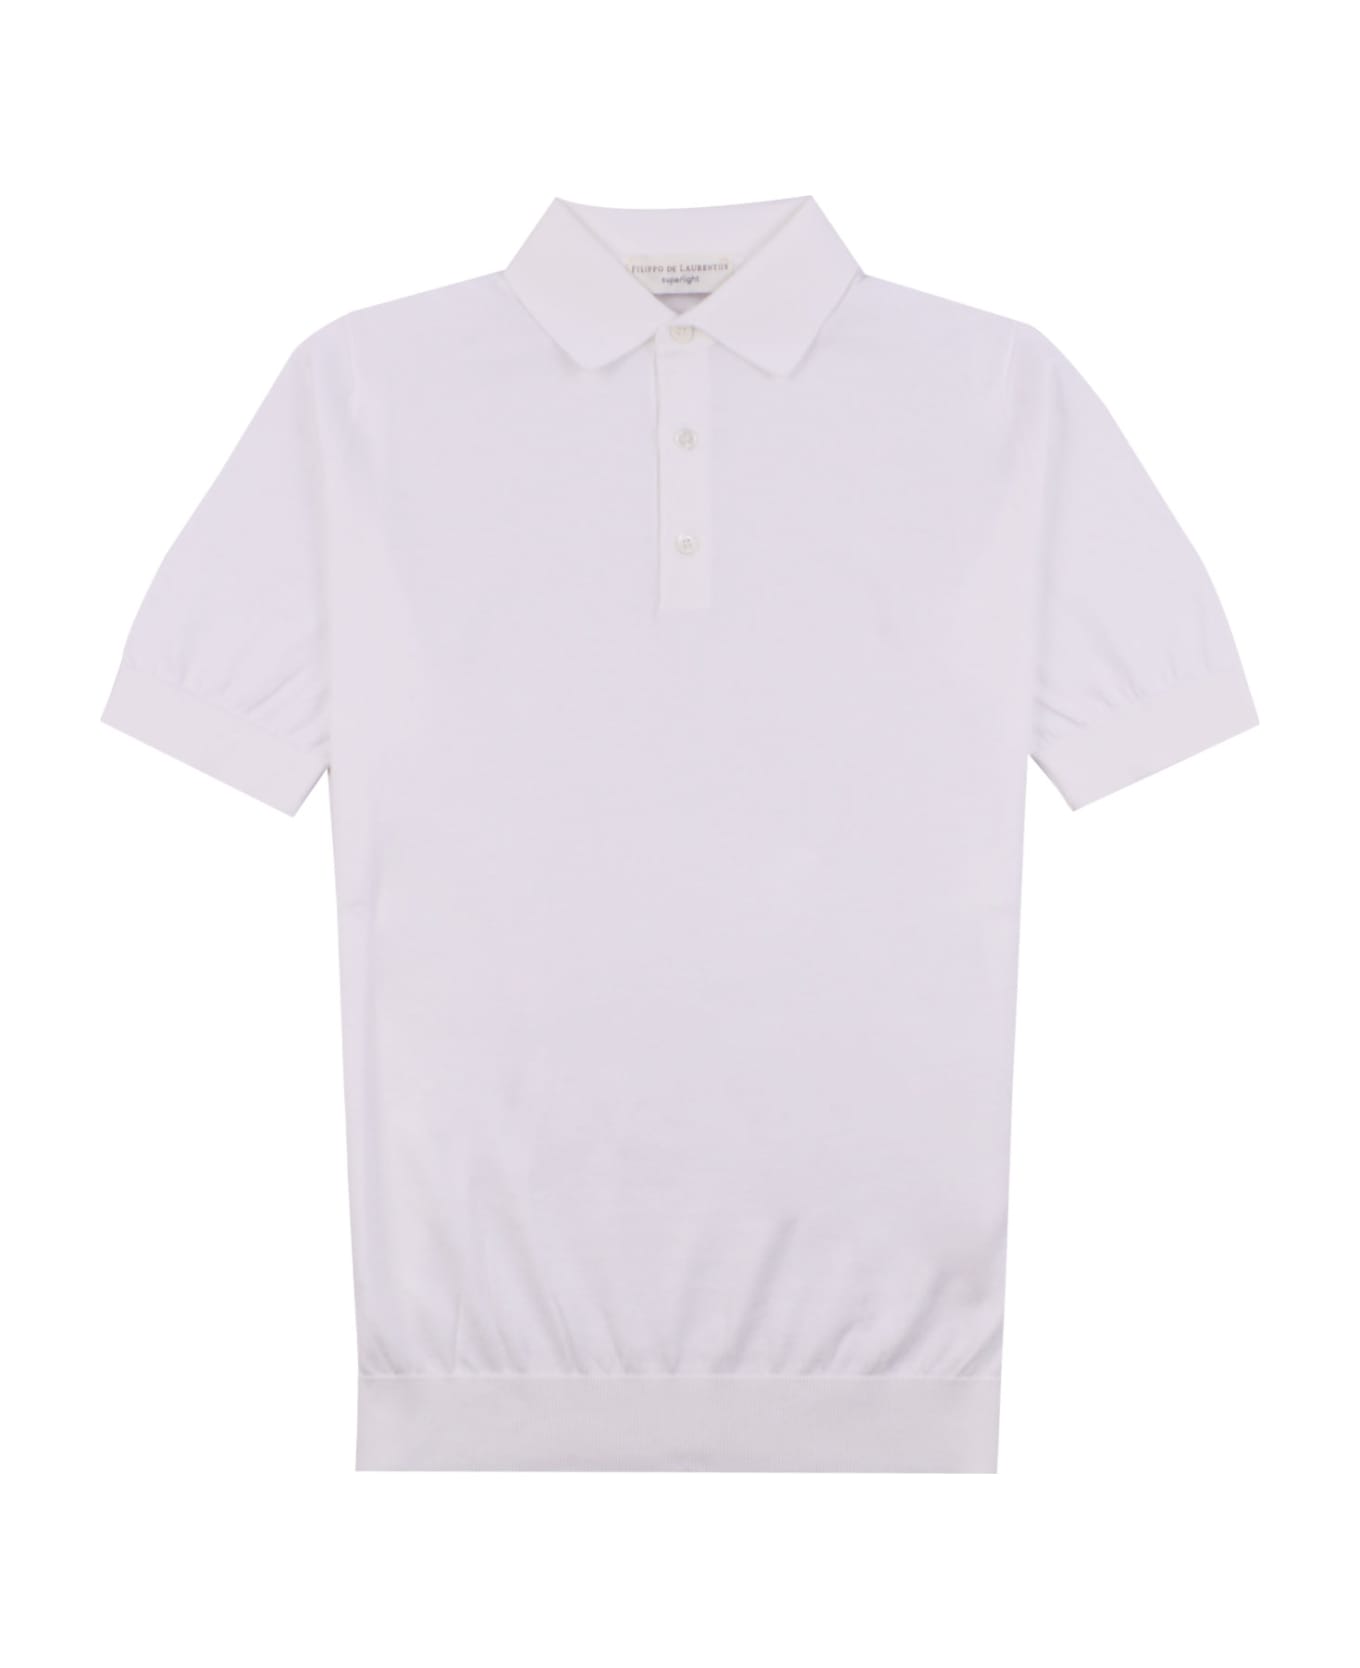 Filippo De Laurentiis T-shirt - White ポロシャツ